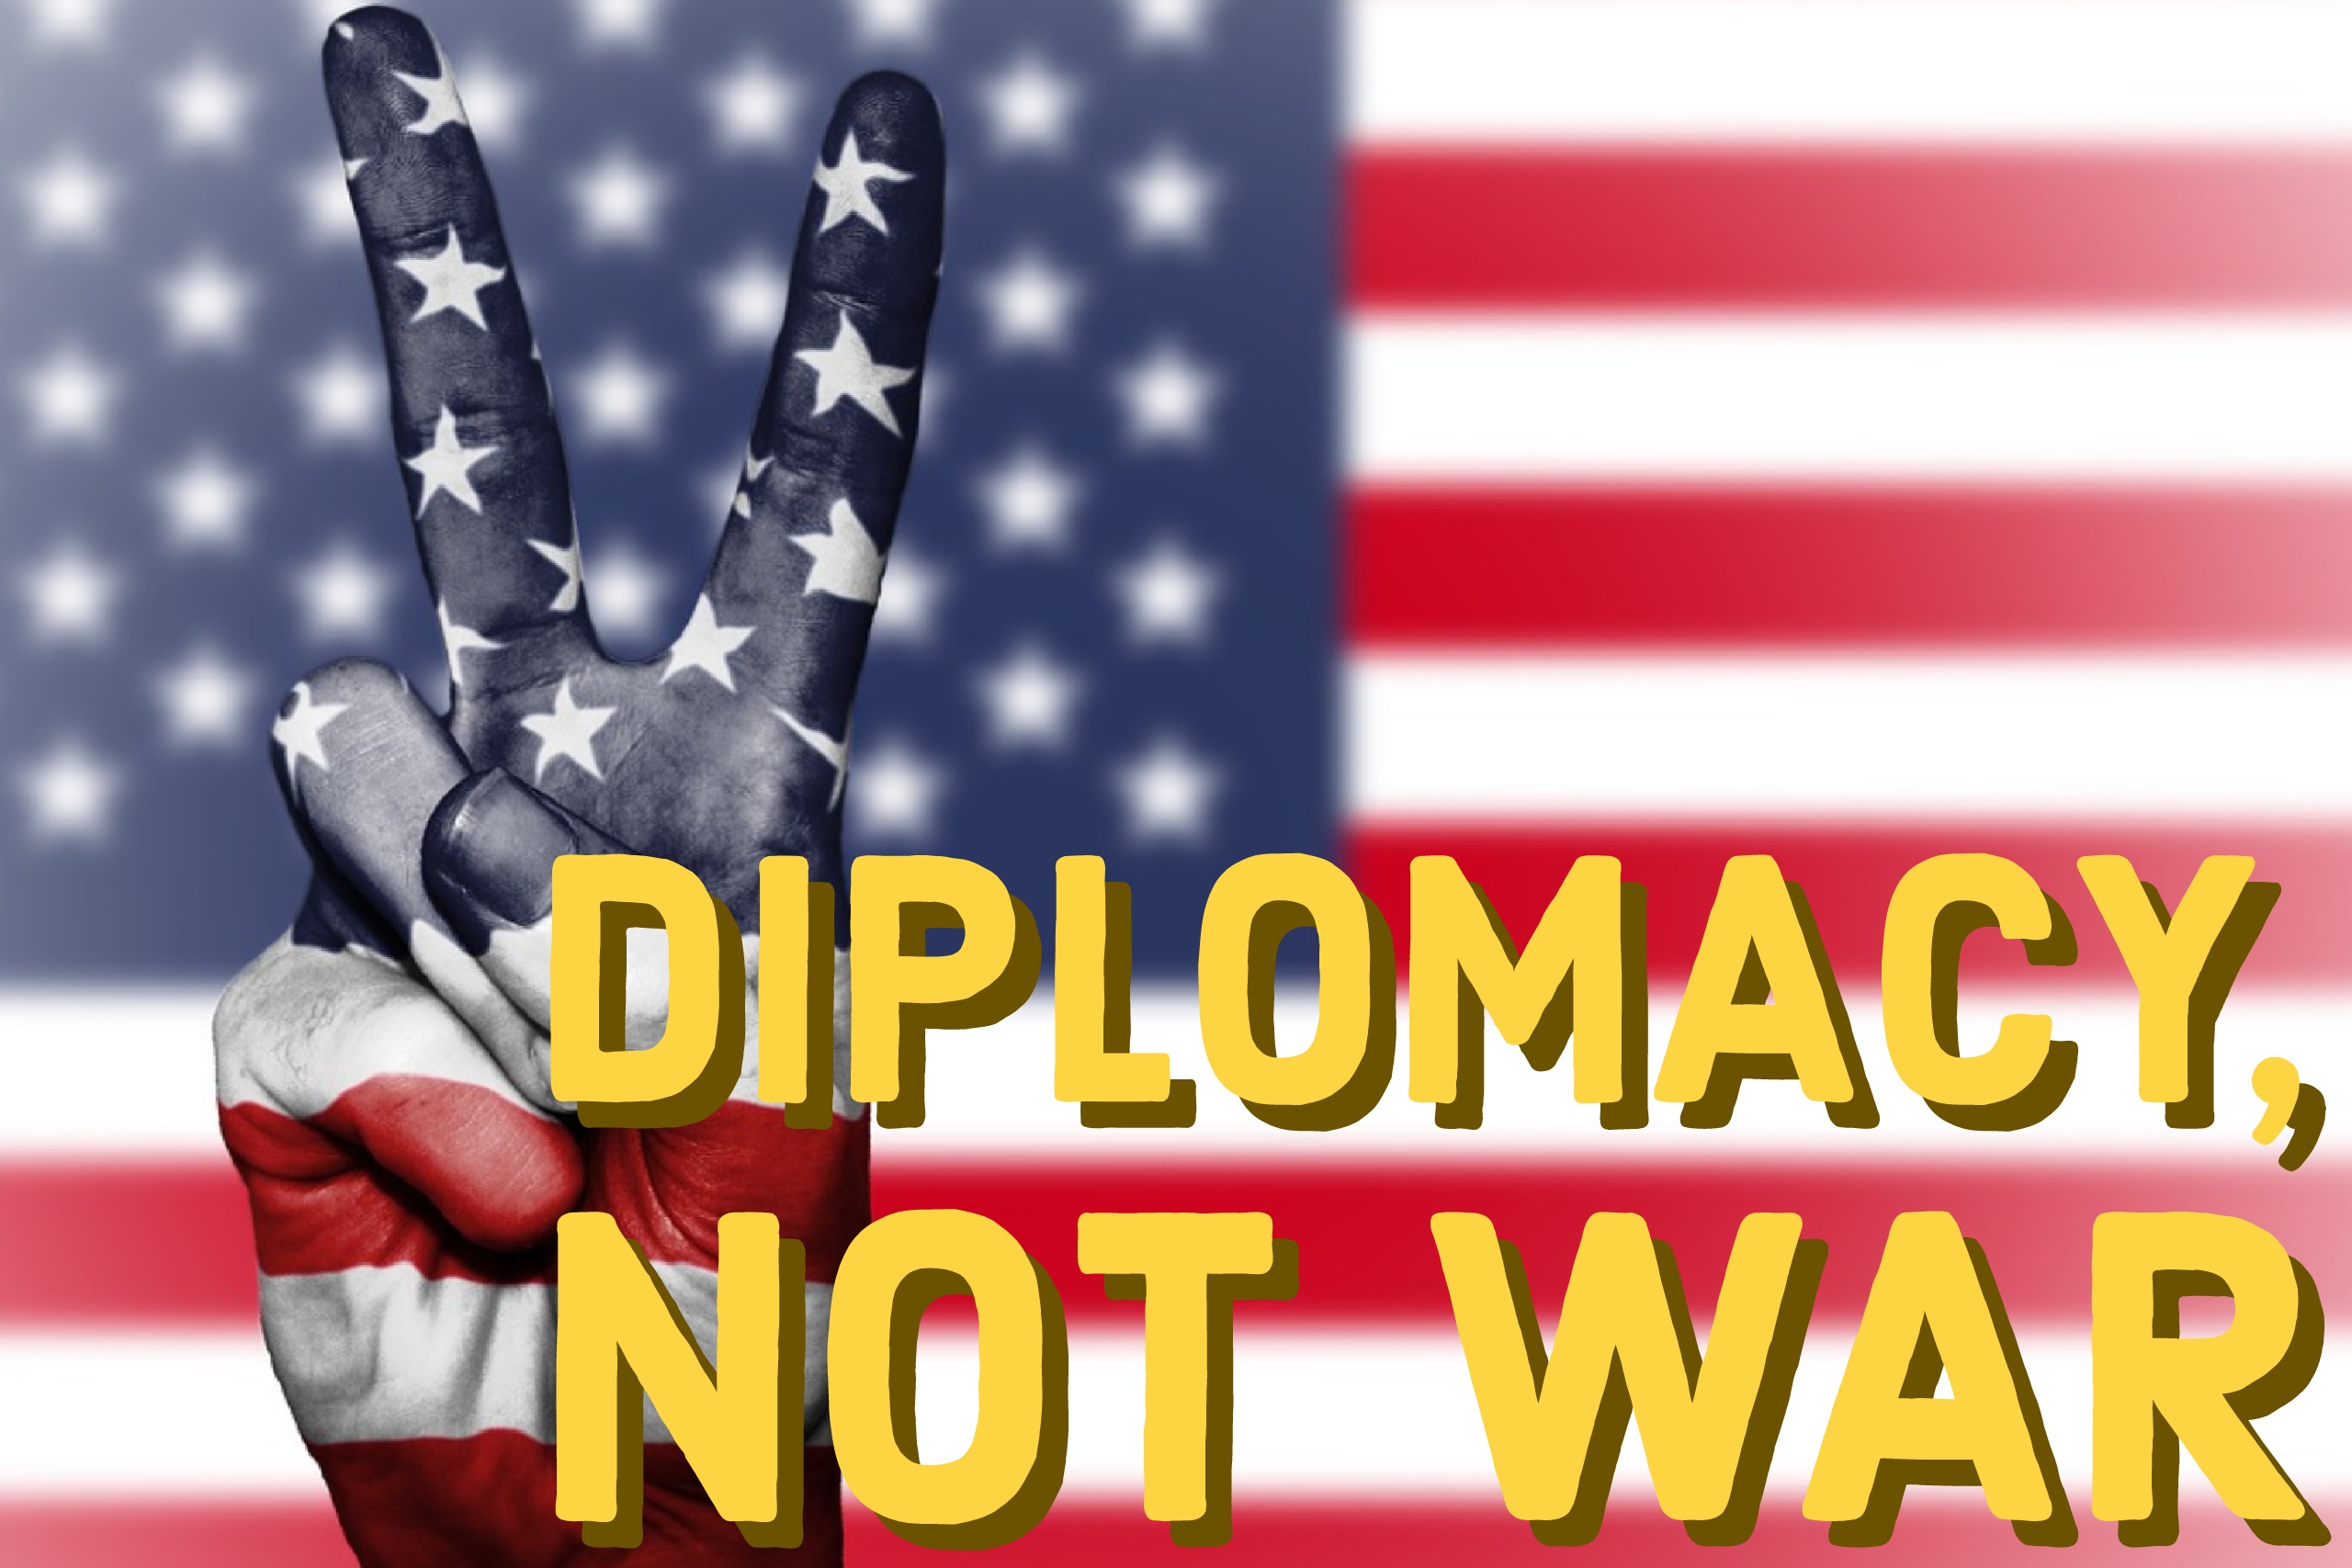 updateddiplomacy icon